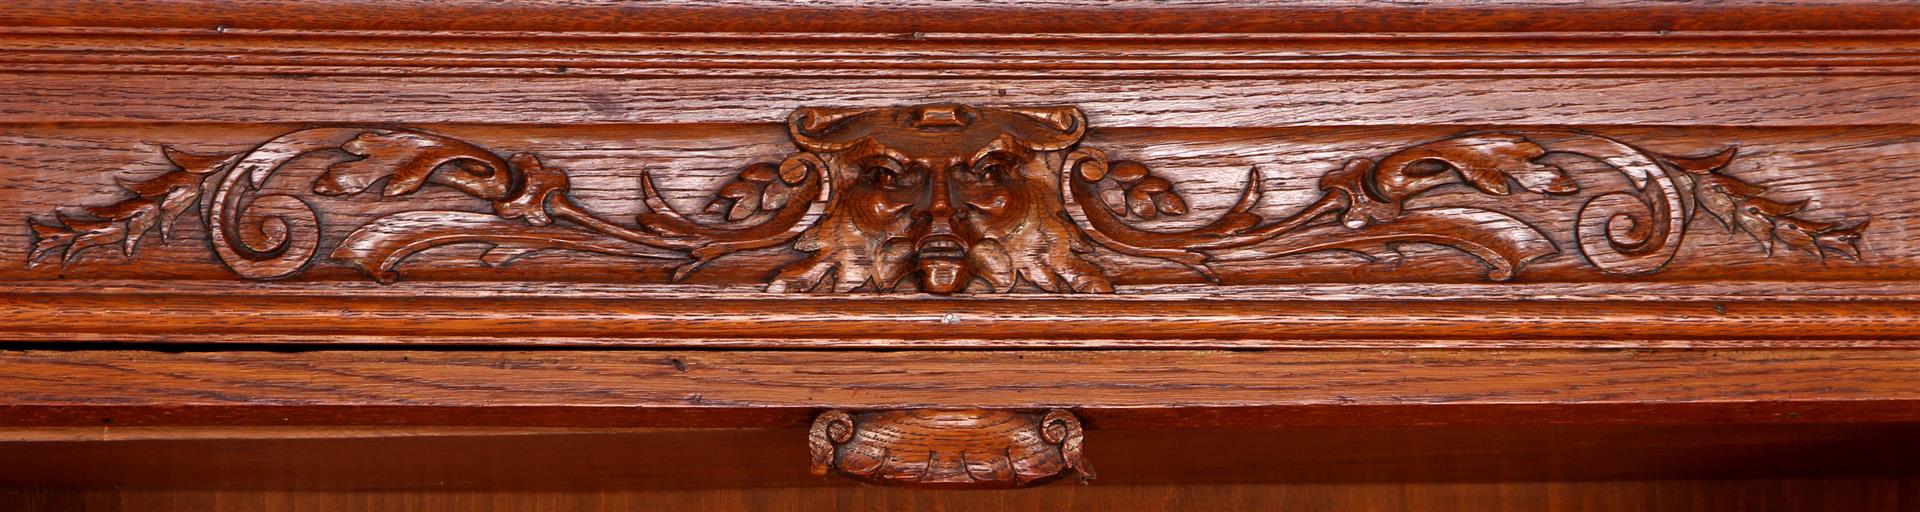 Oak cabinet - Image 3 of 3